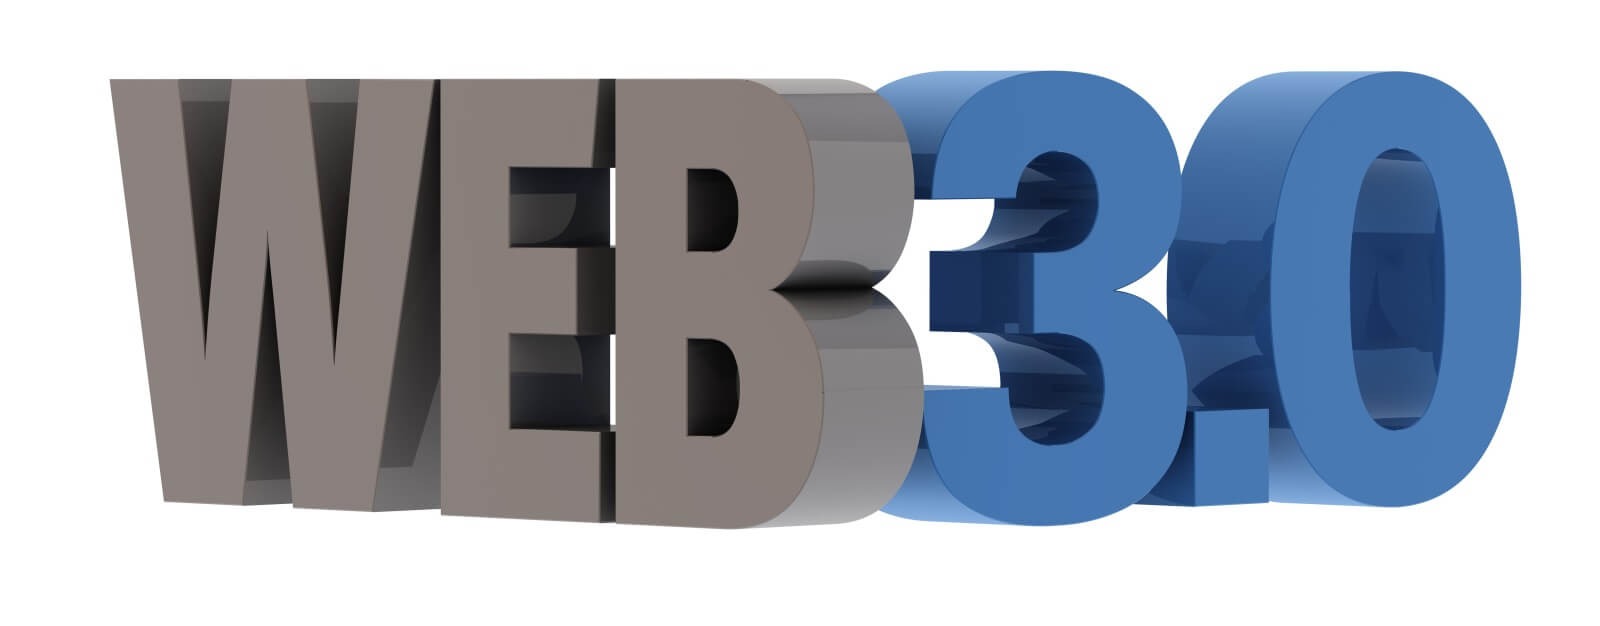 0 003. Web3. Веб 3.0. Web3 картинка. Web3 логотип.